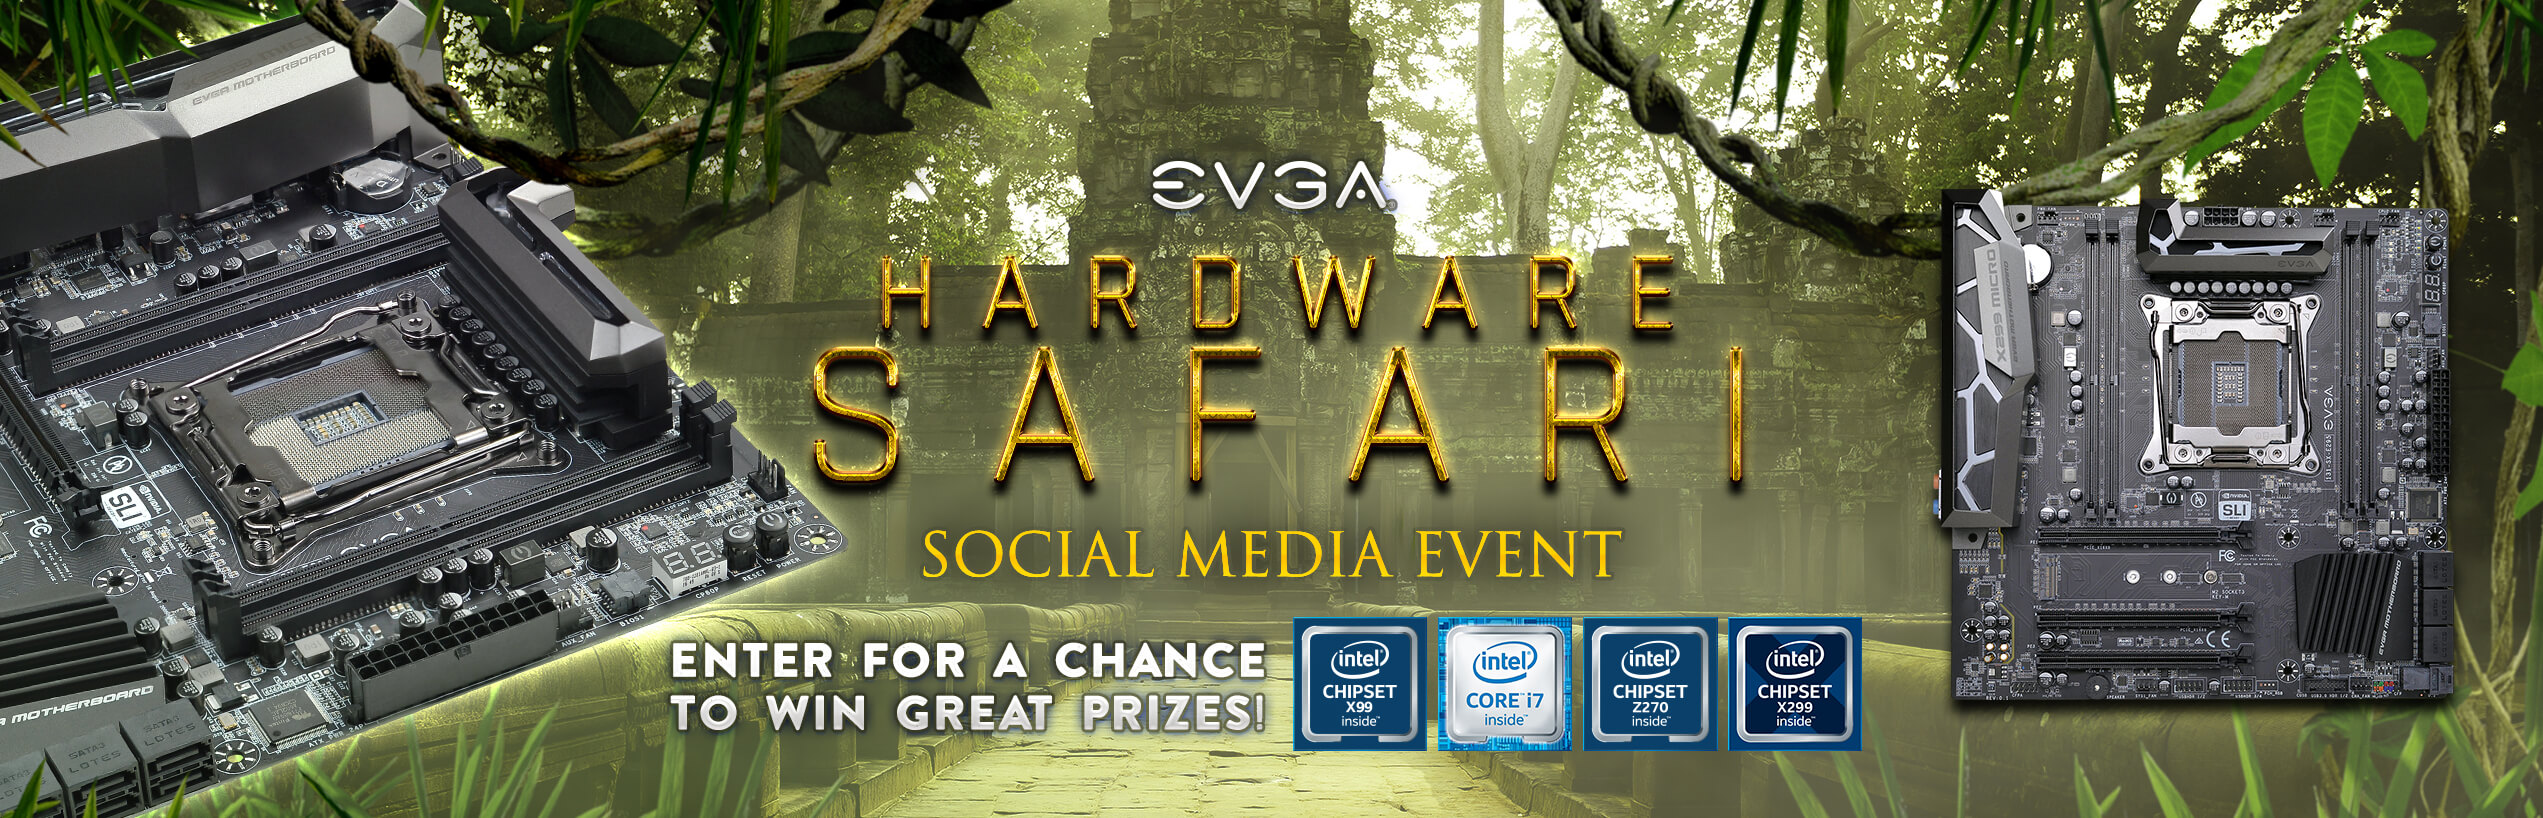 EVGA Hardware Safari Social Media Event